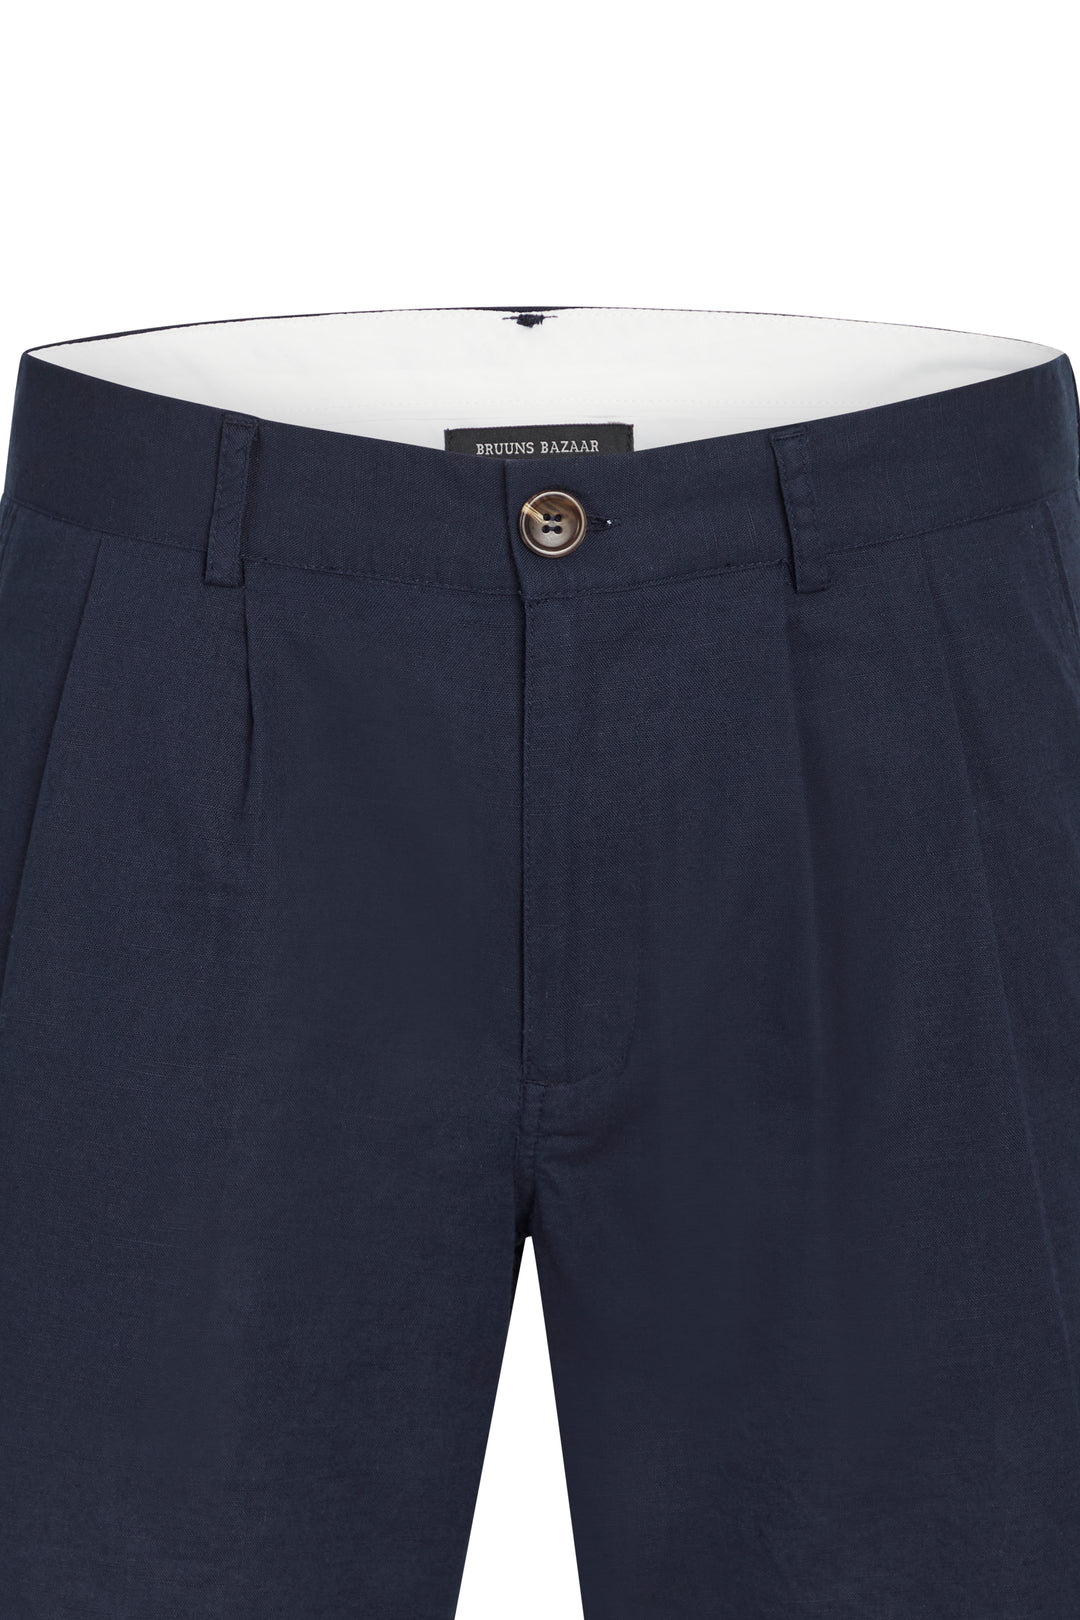 Bruuns Bazaar Men LinowBBGermain shorts Shorts Navy Blazer